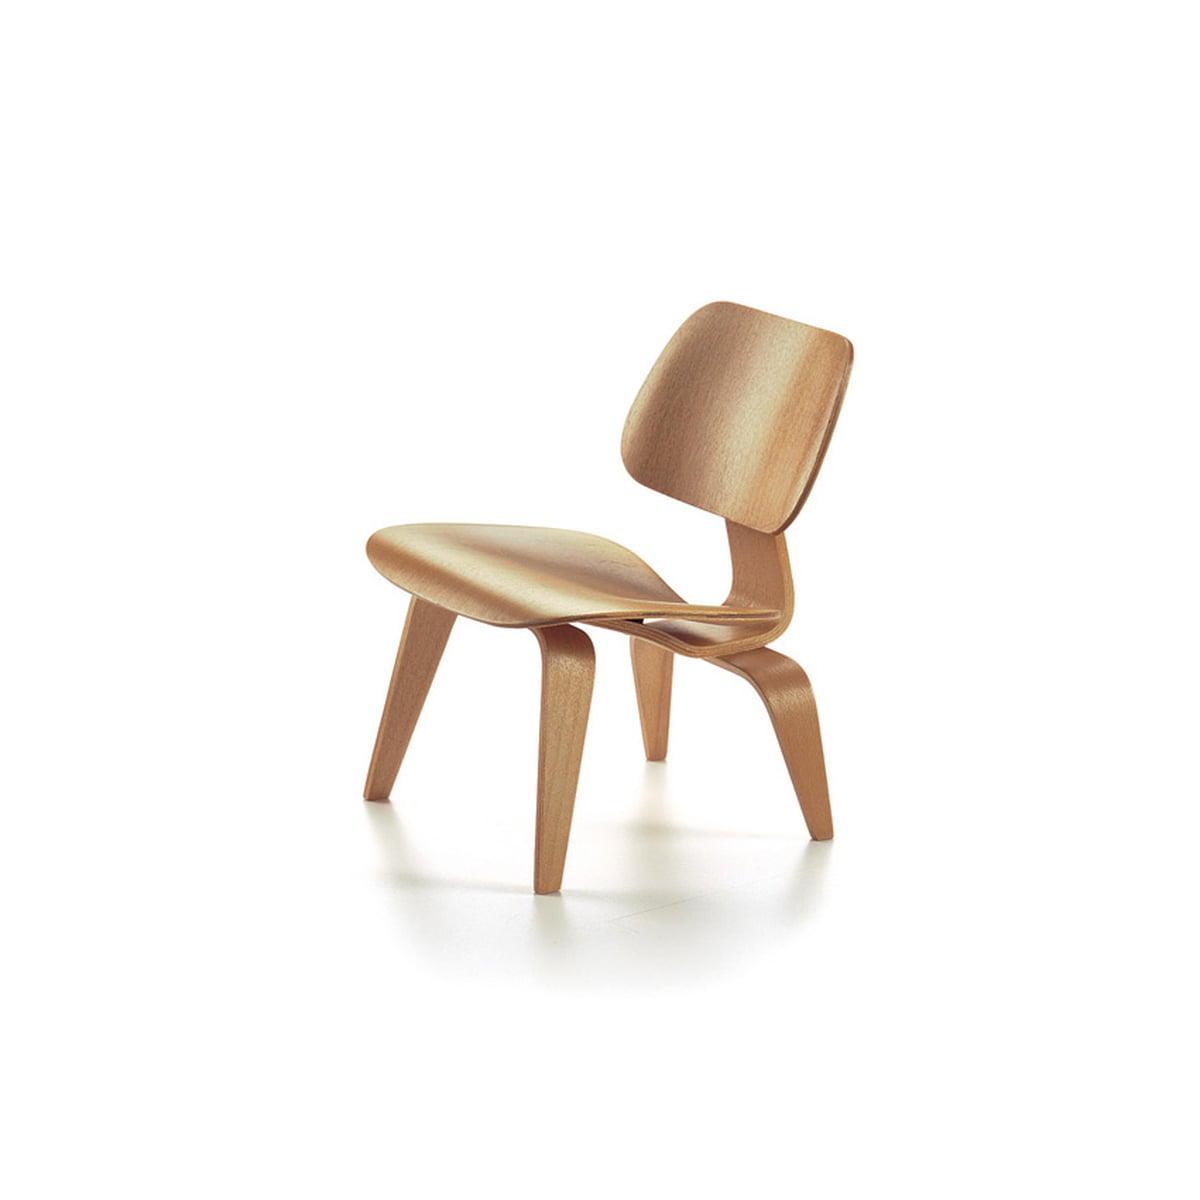 Mededogen Arena snijden Vitra - Miniatuur Eames LCW stoel | Connox